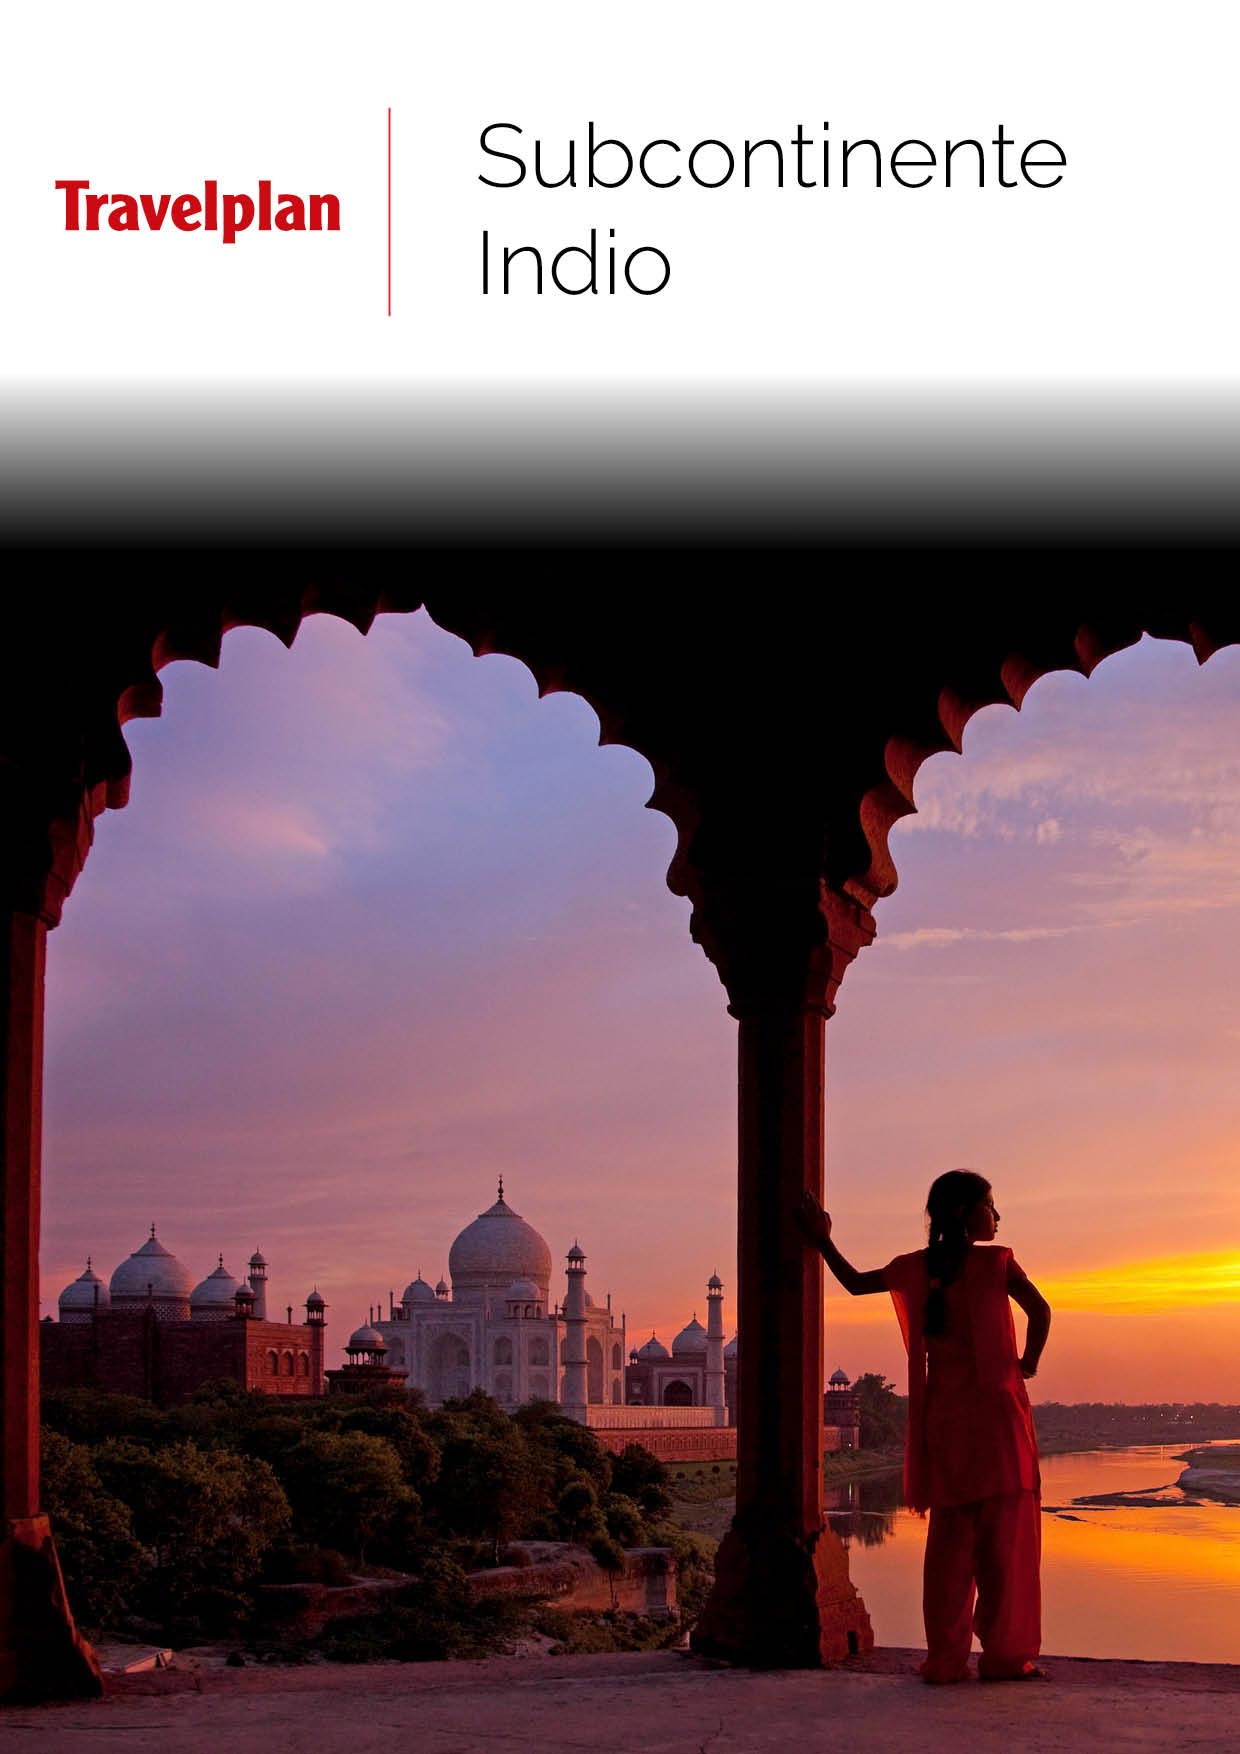 Travelplan eMagazines. Catálogo interactivo digital destino Subcontinente Indio 2022-2023